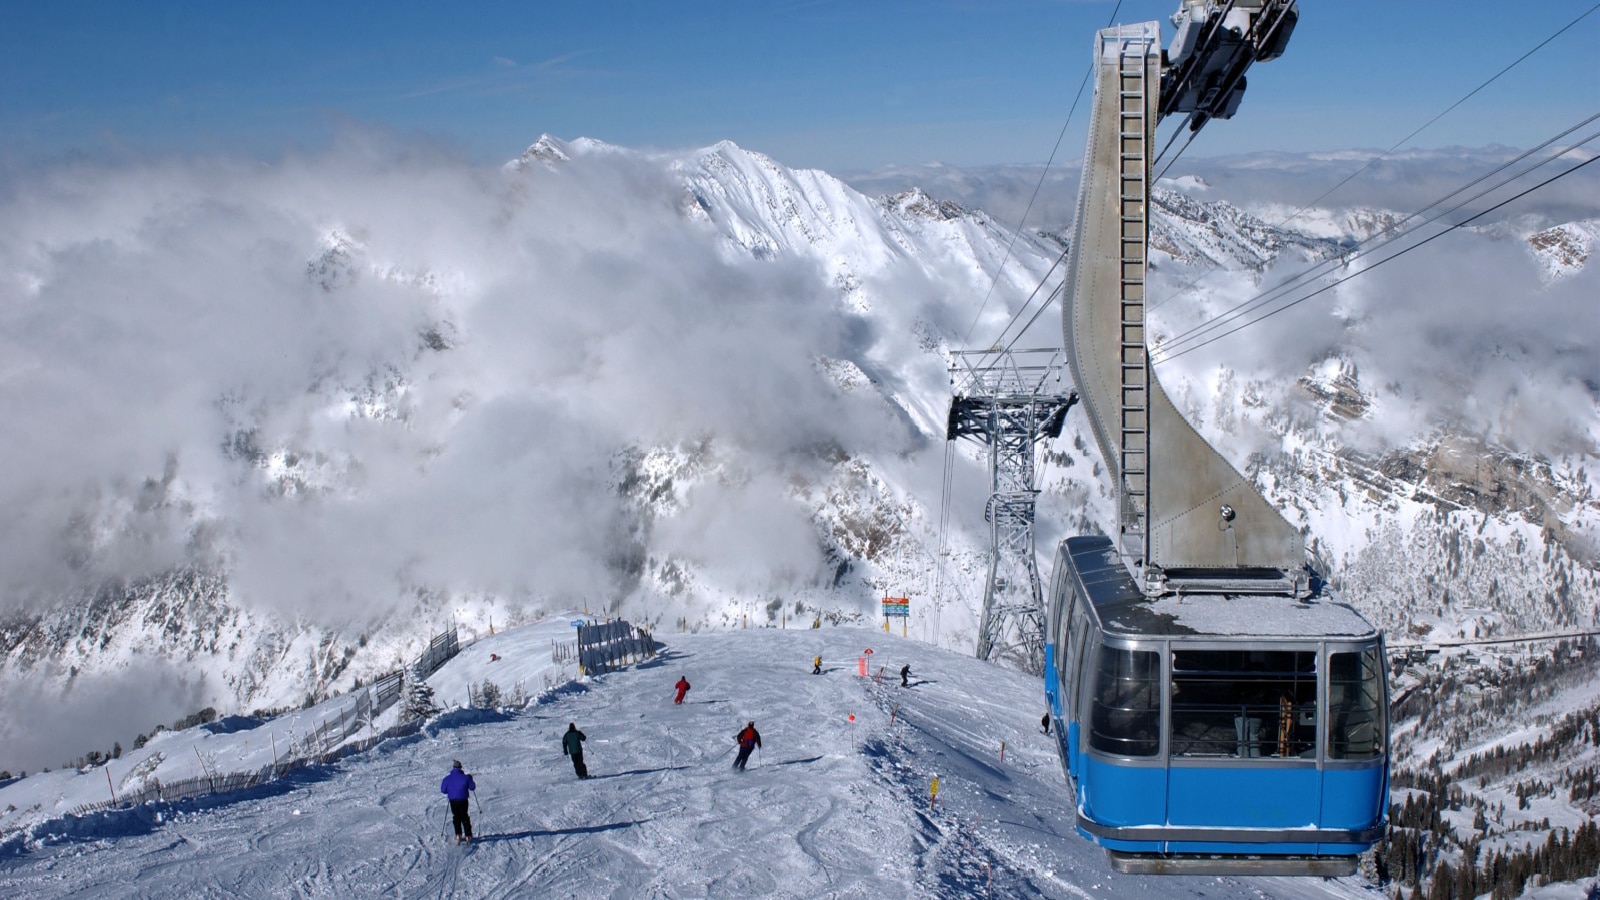 Spectacular view to the mountains and blue ski tram at Snowbird ski resort in Utah